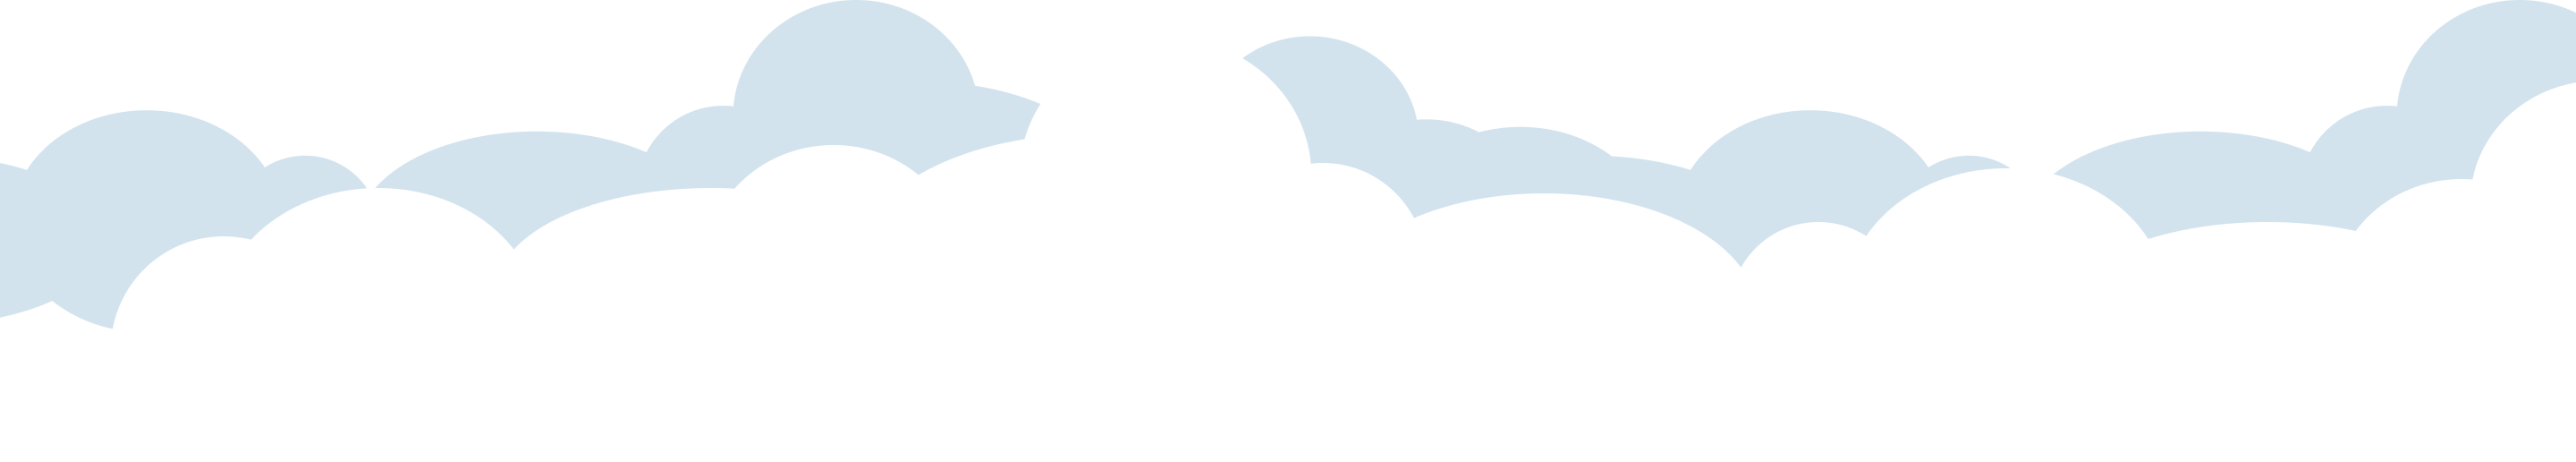 Lift-Demo-clouds-whitebottom